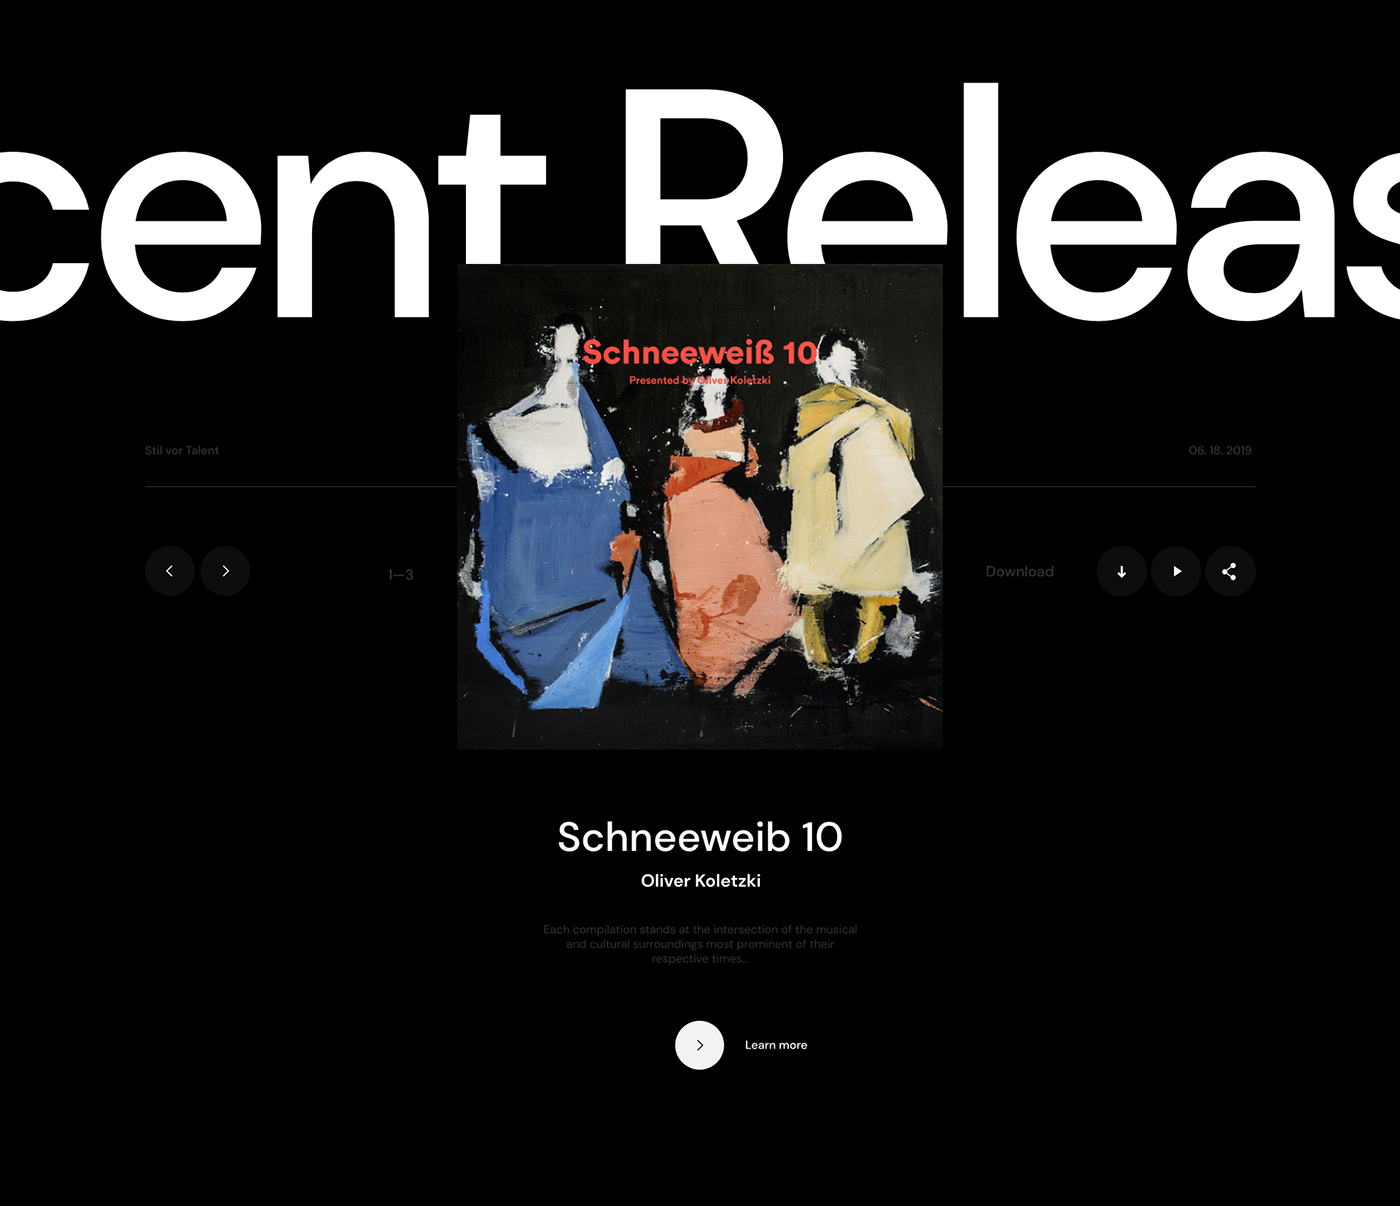 Website development product service design UI/UX artist music musician dj